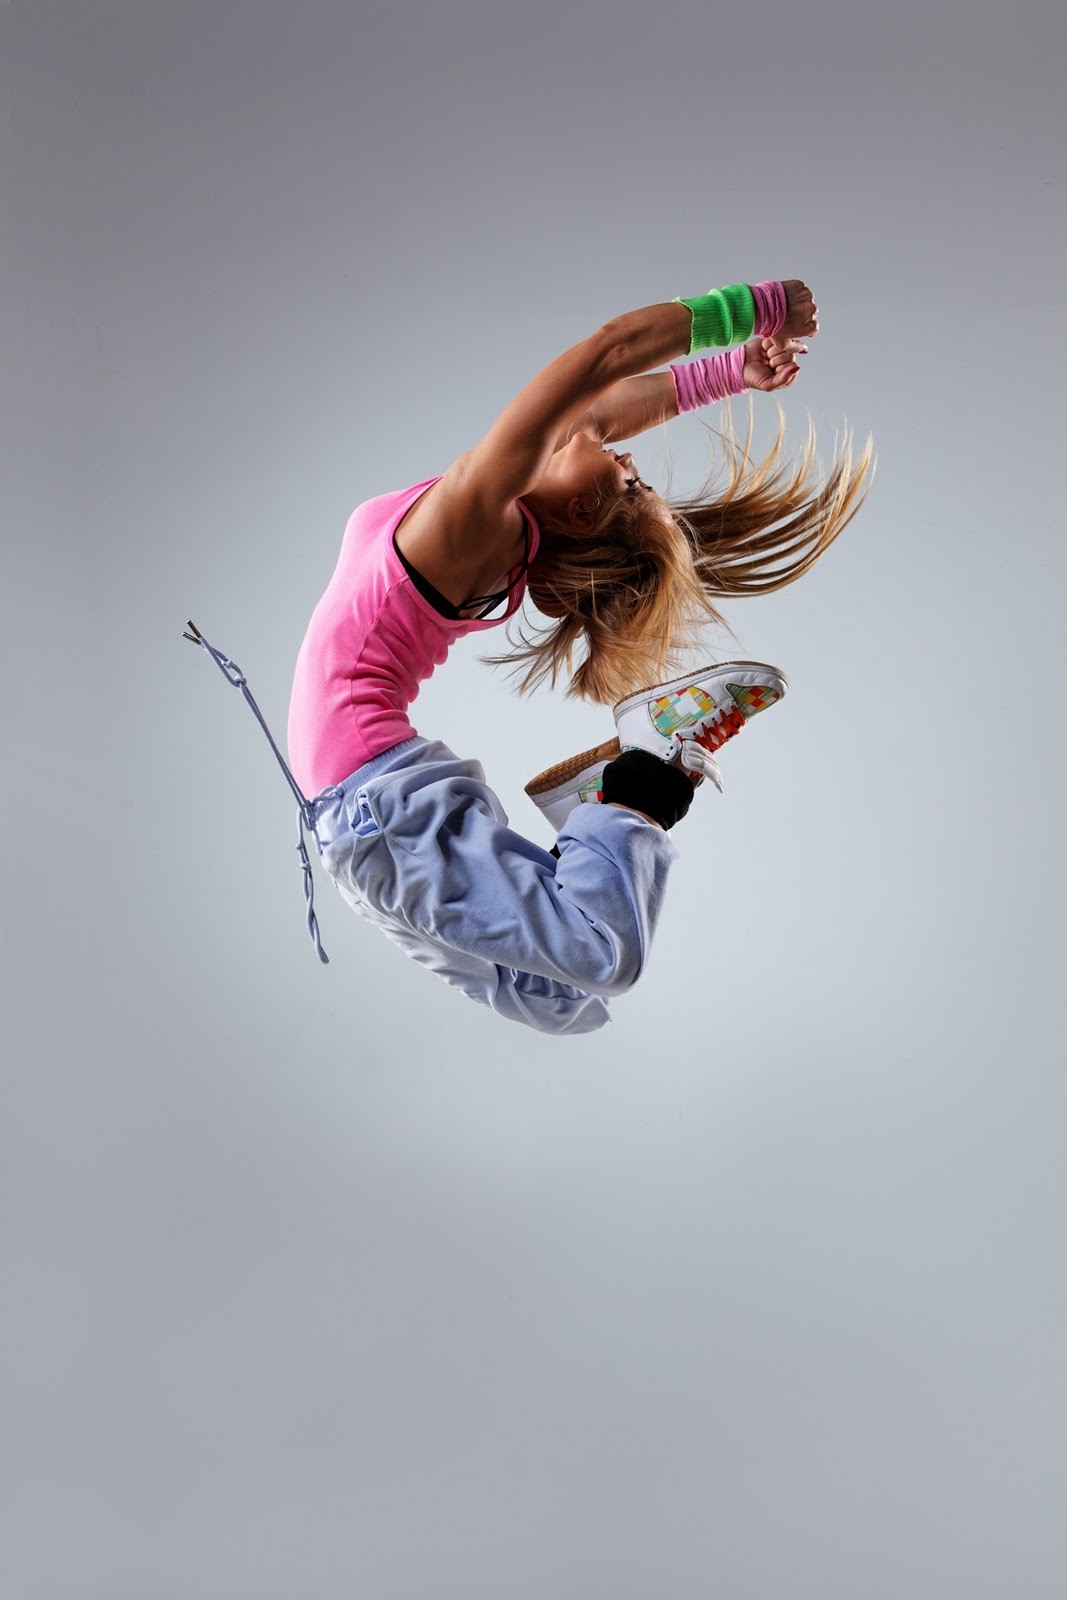 Dancing Breakdance Dancer Women Blonde Jumping Pink Tops Sneakers 1067x1600